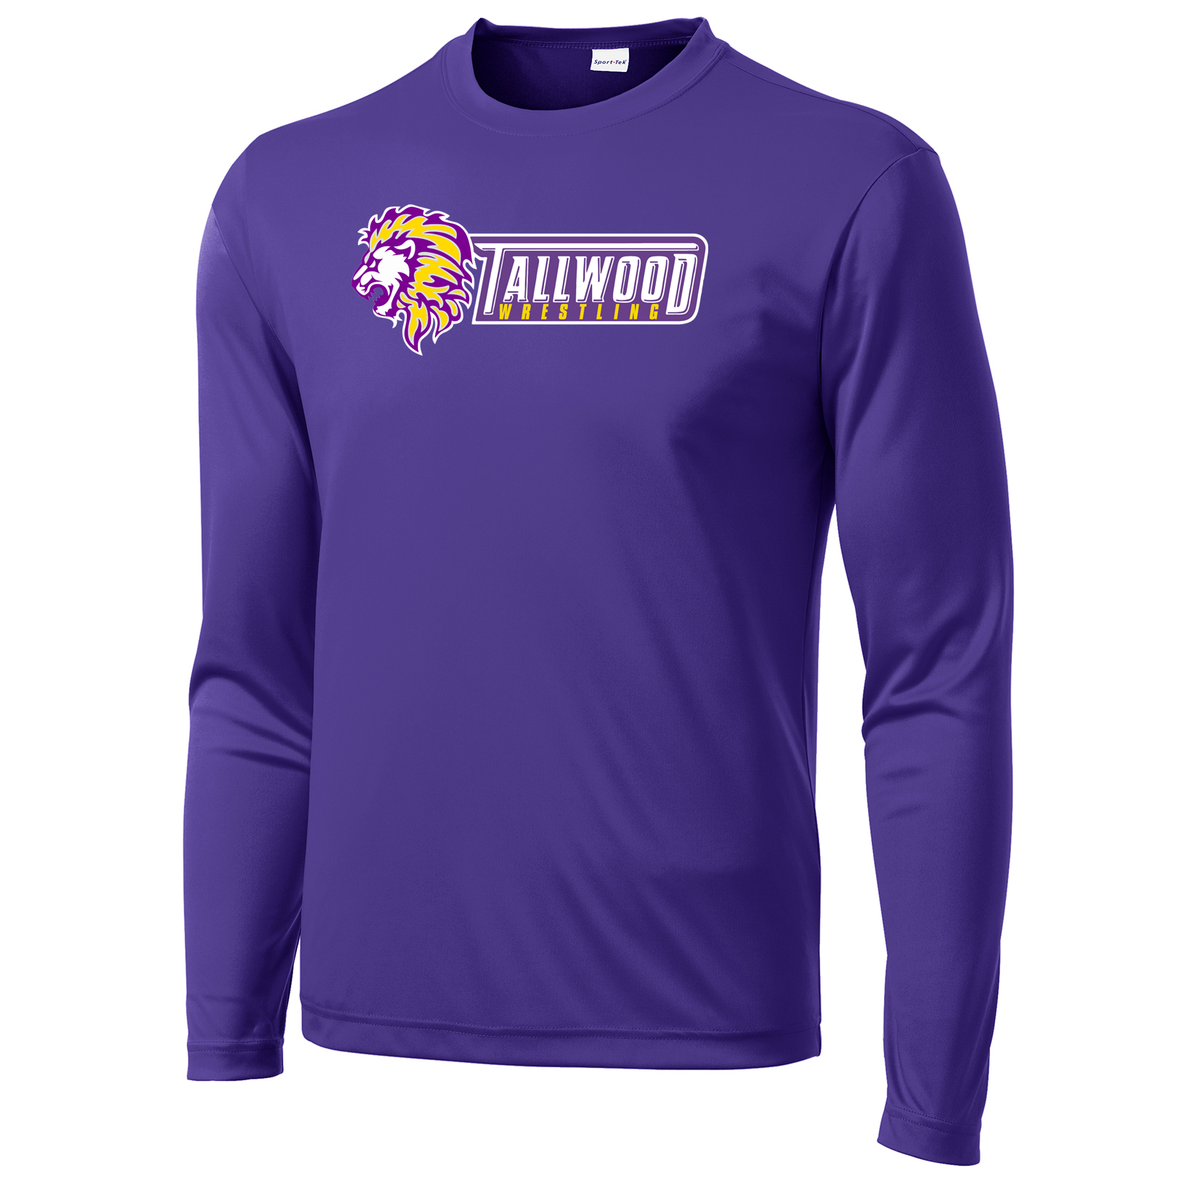 Tallwood Wrestling Long Sleeve Performance Shirt